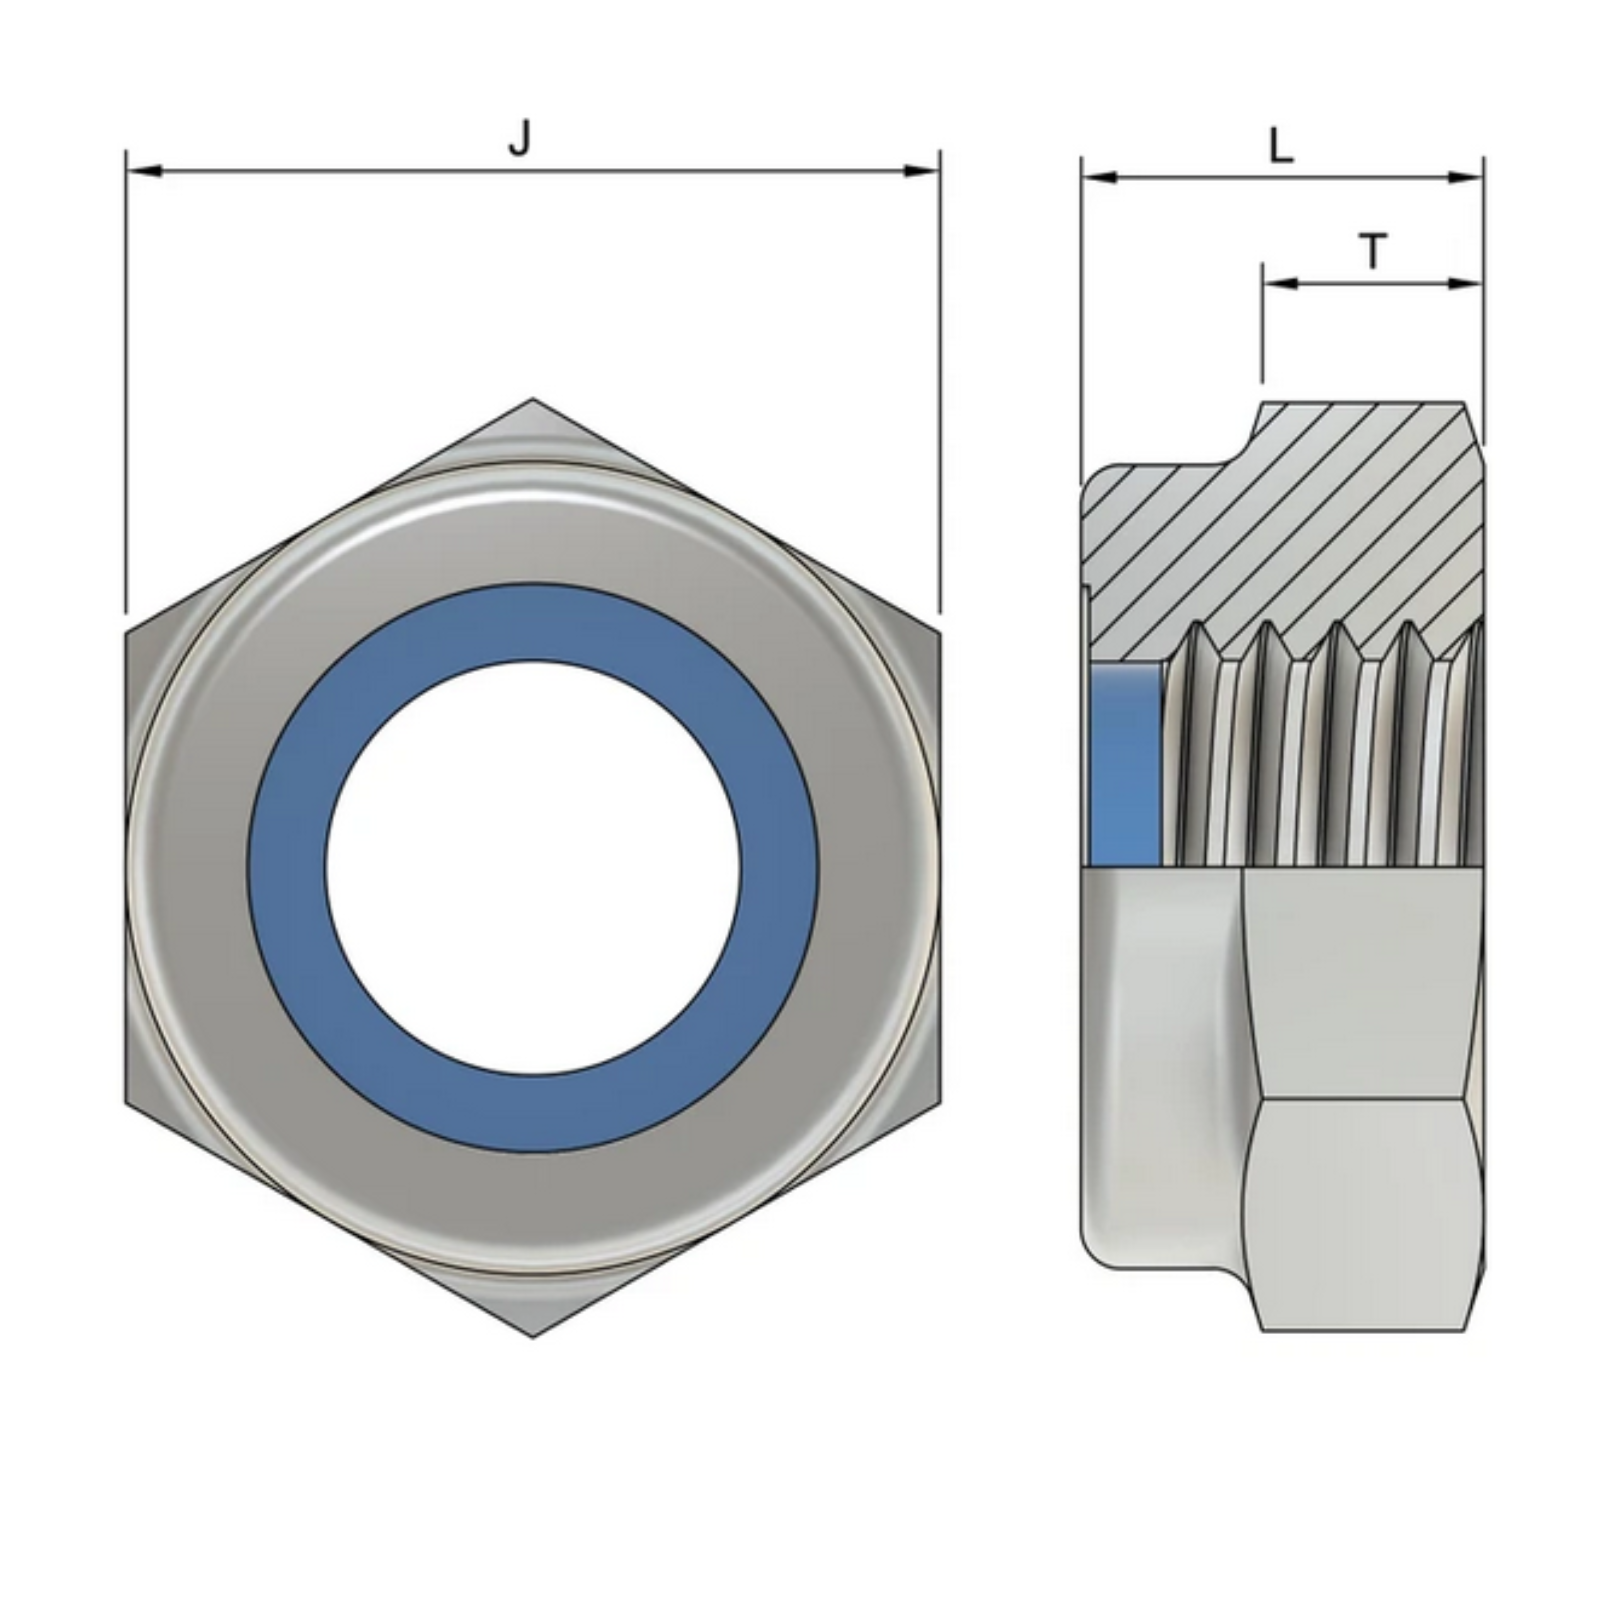 M10 Hexagon Nylon Locking Nuts (DIN 985) - Zinc Plated Steel